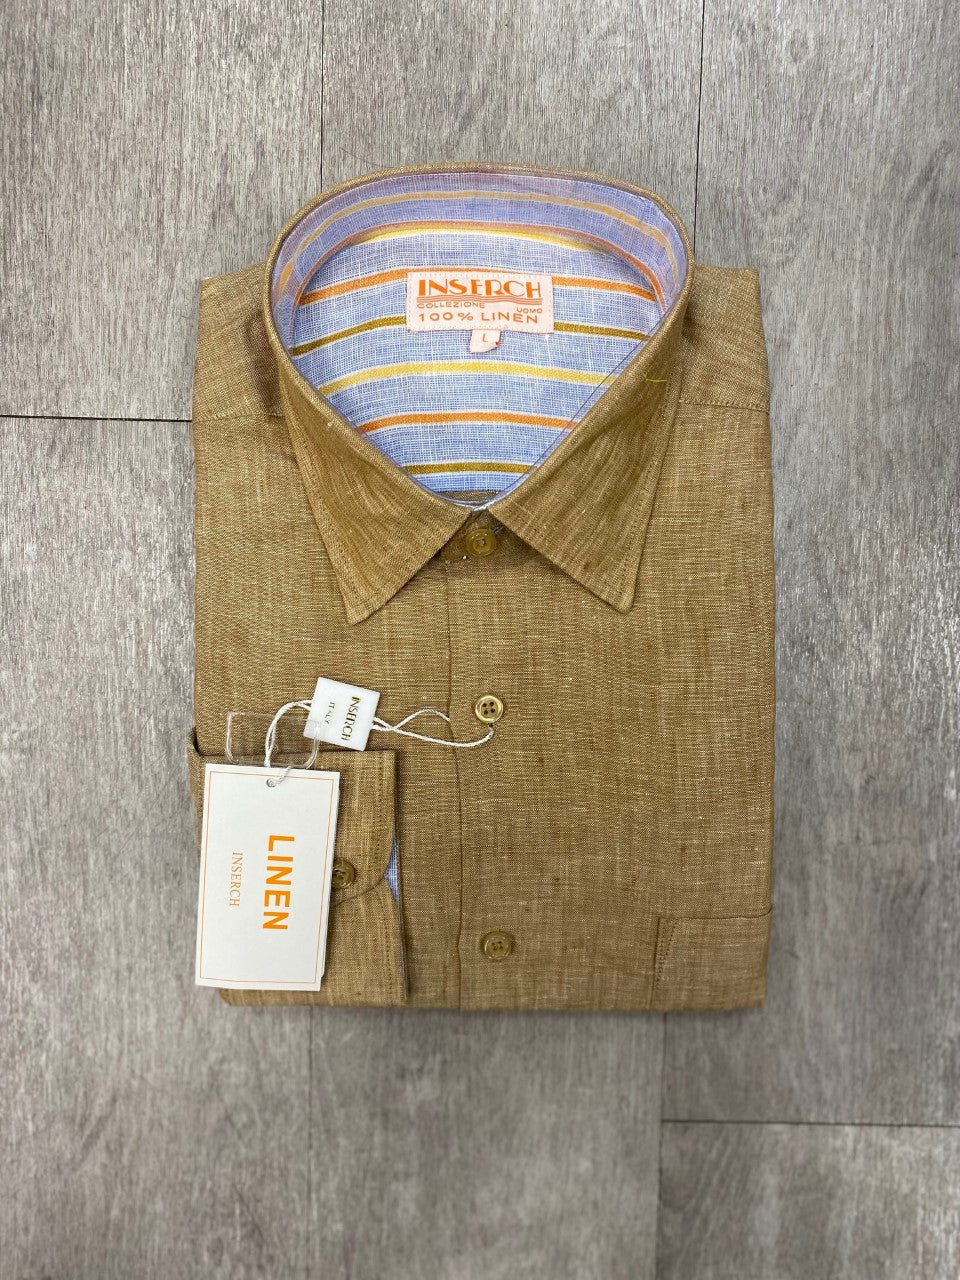 Inserch Premium Linen Yarn-Dye Solid Long Sleeve Shirt 24116-09 Khaki